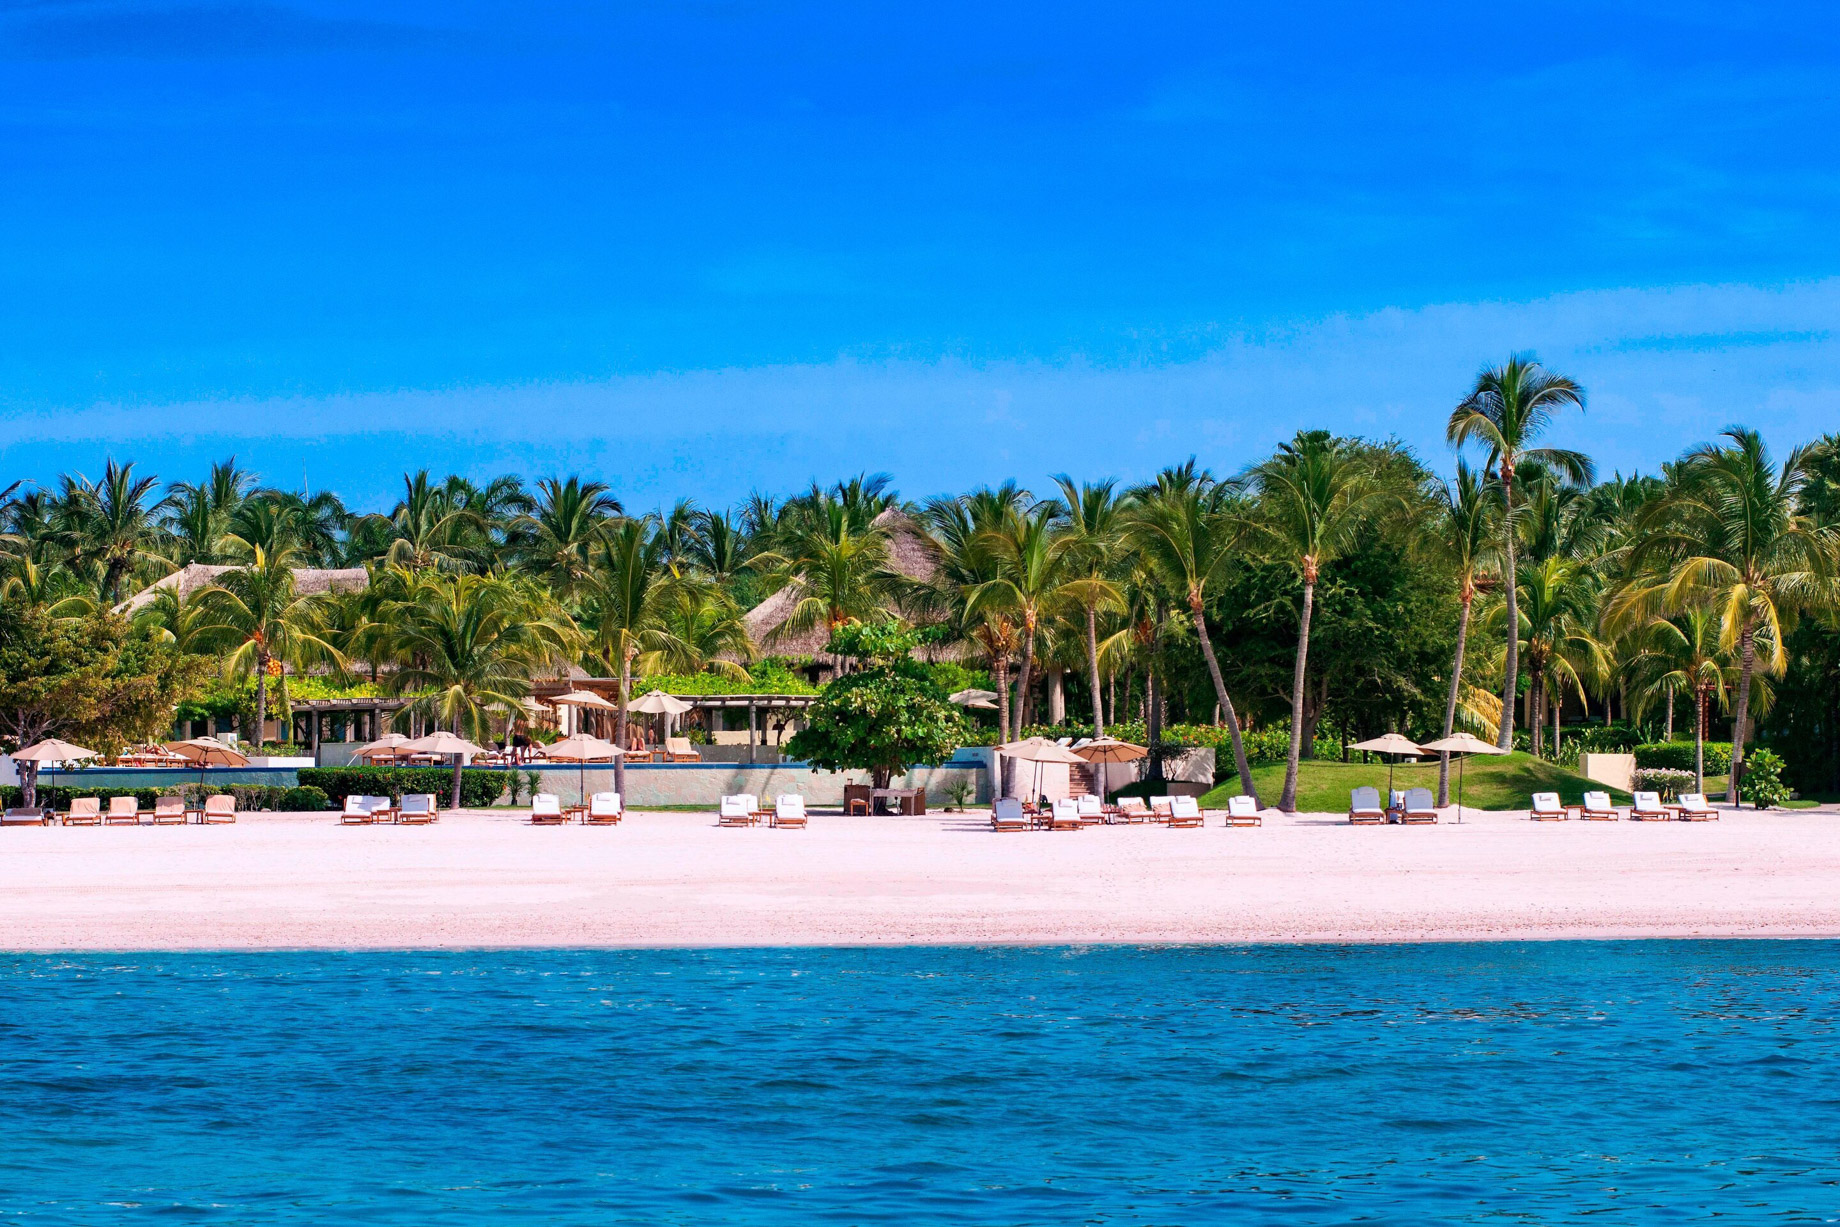 The St. Regis Punta Mita Resort – Nayarit, Mexico – Exterior Beach View